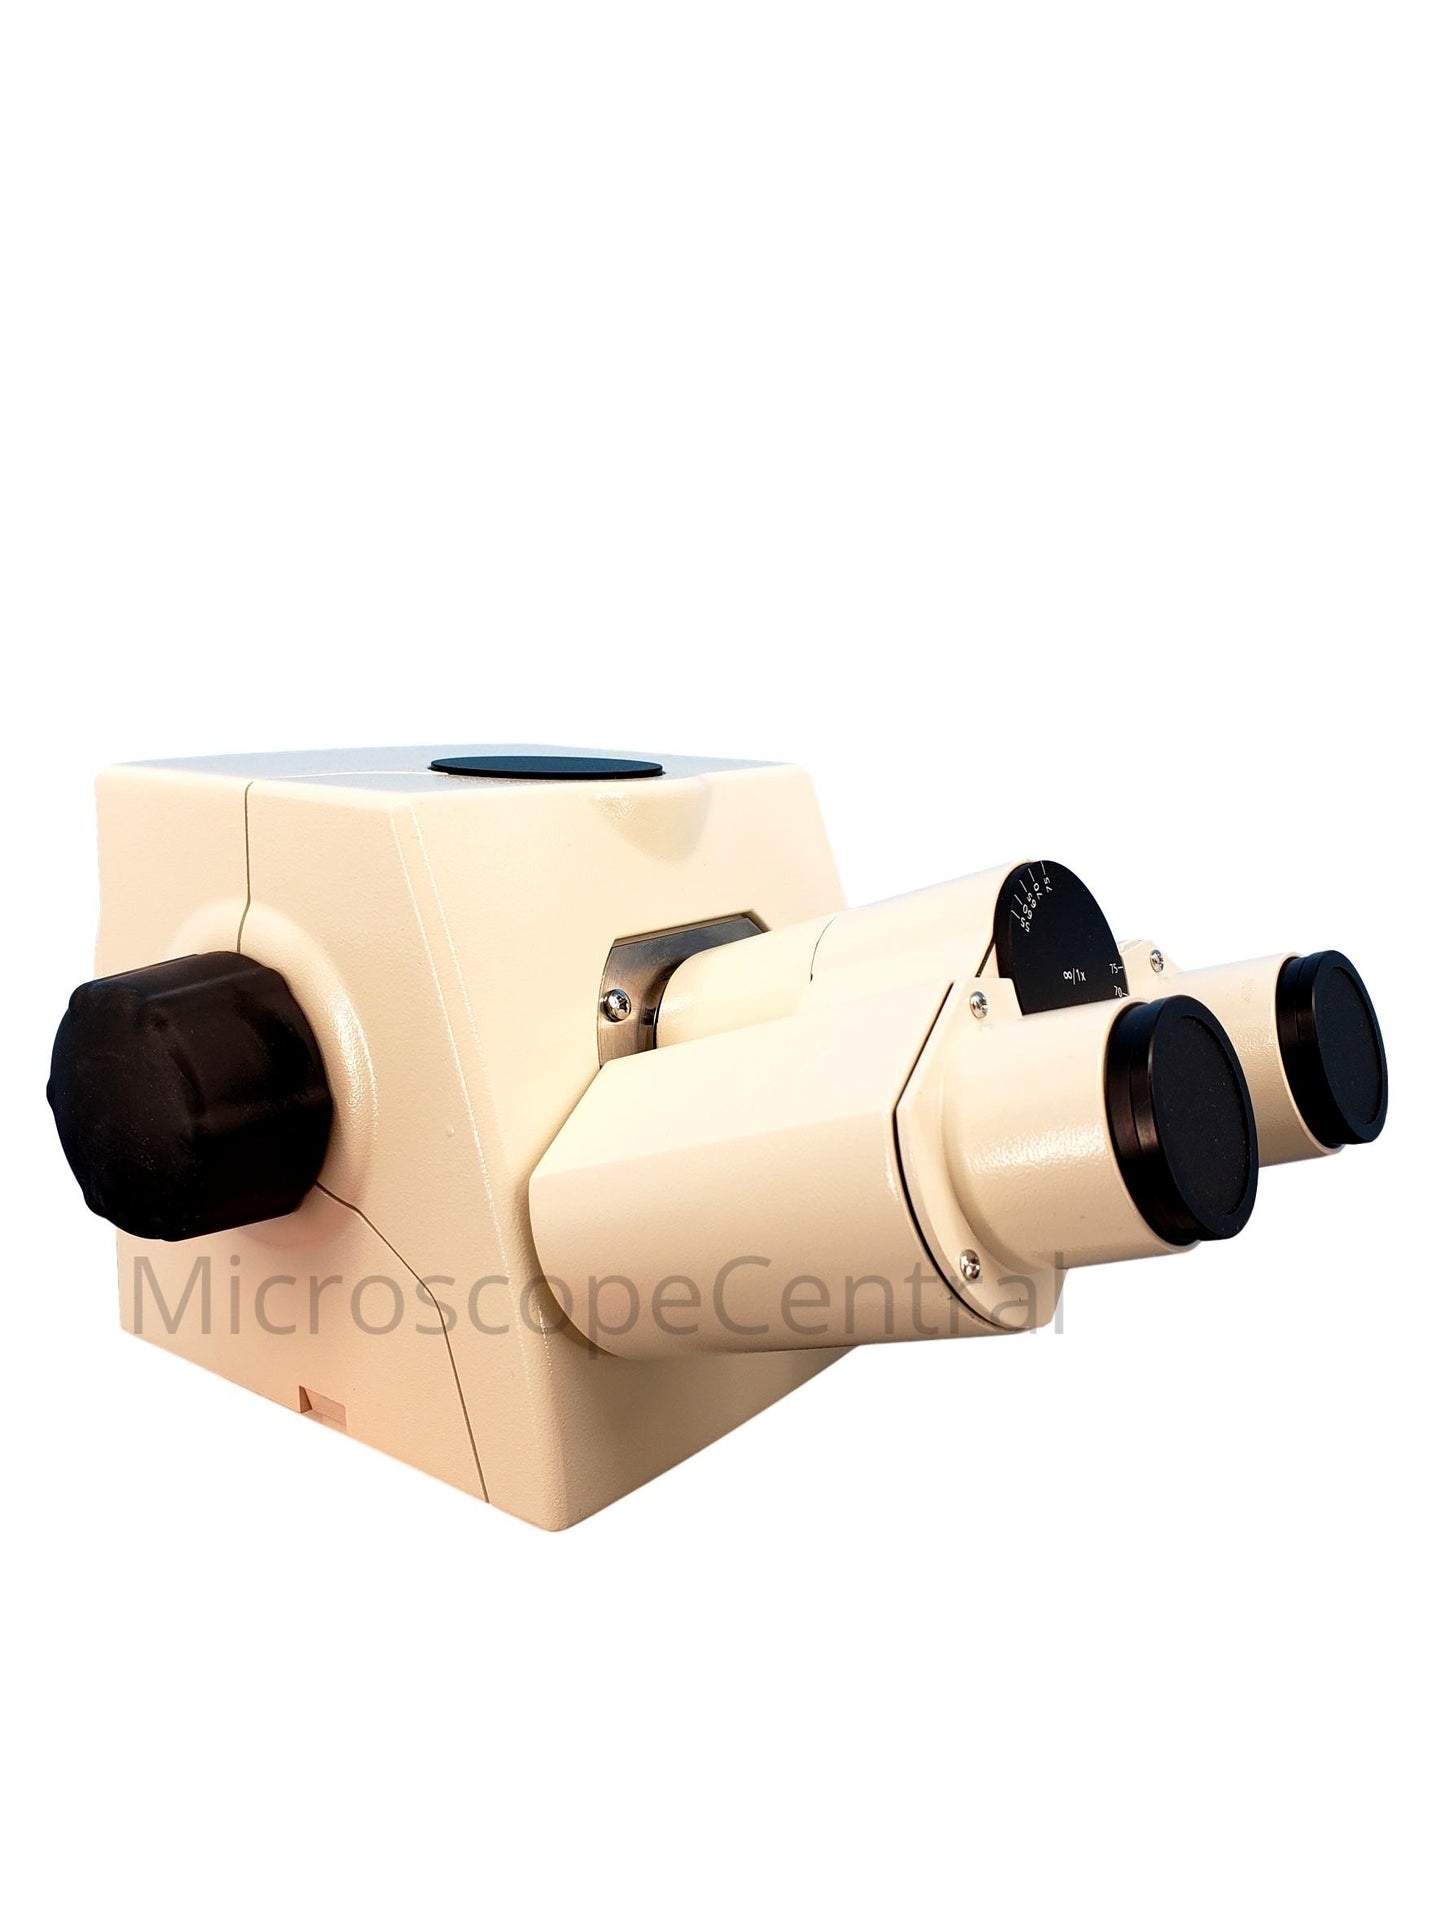 Carl Zeiss Ergonomic Binocular Microscope Head 1104-293